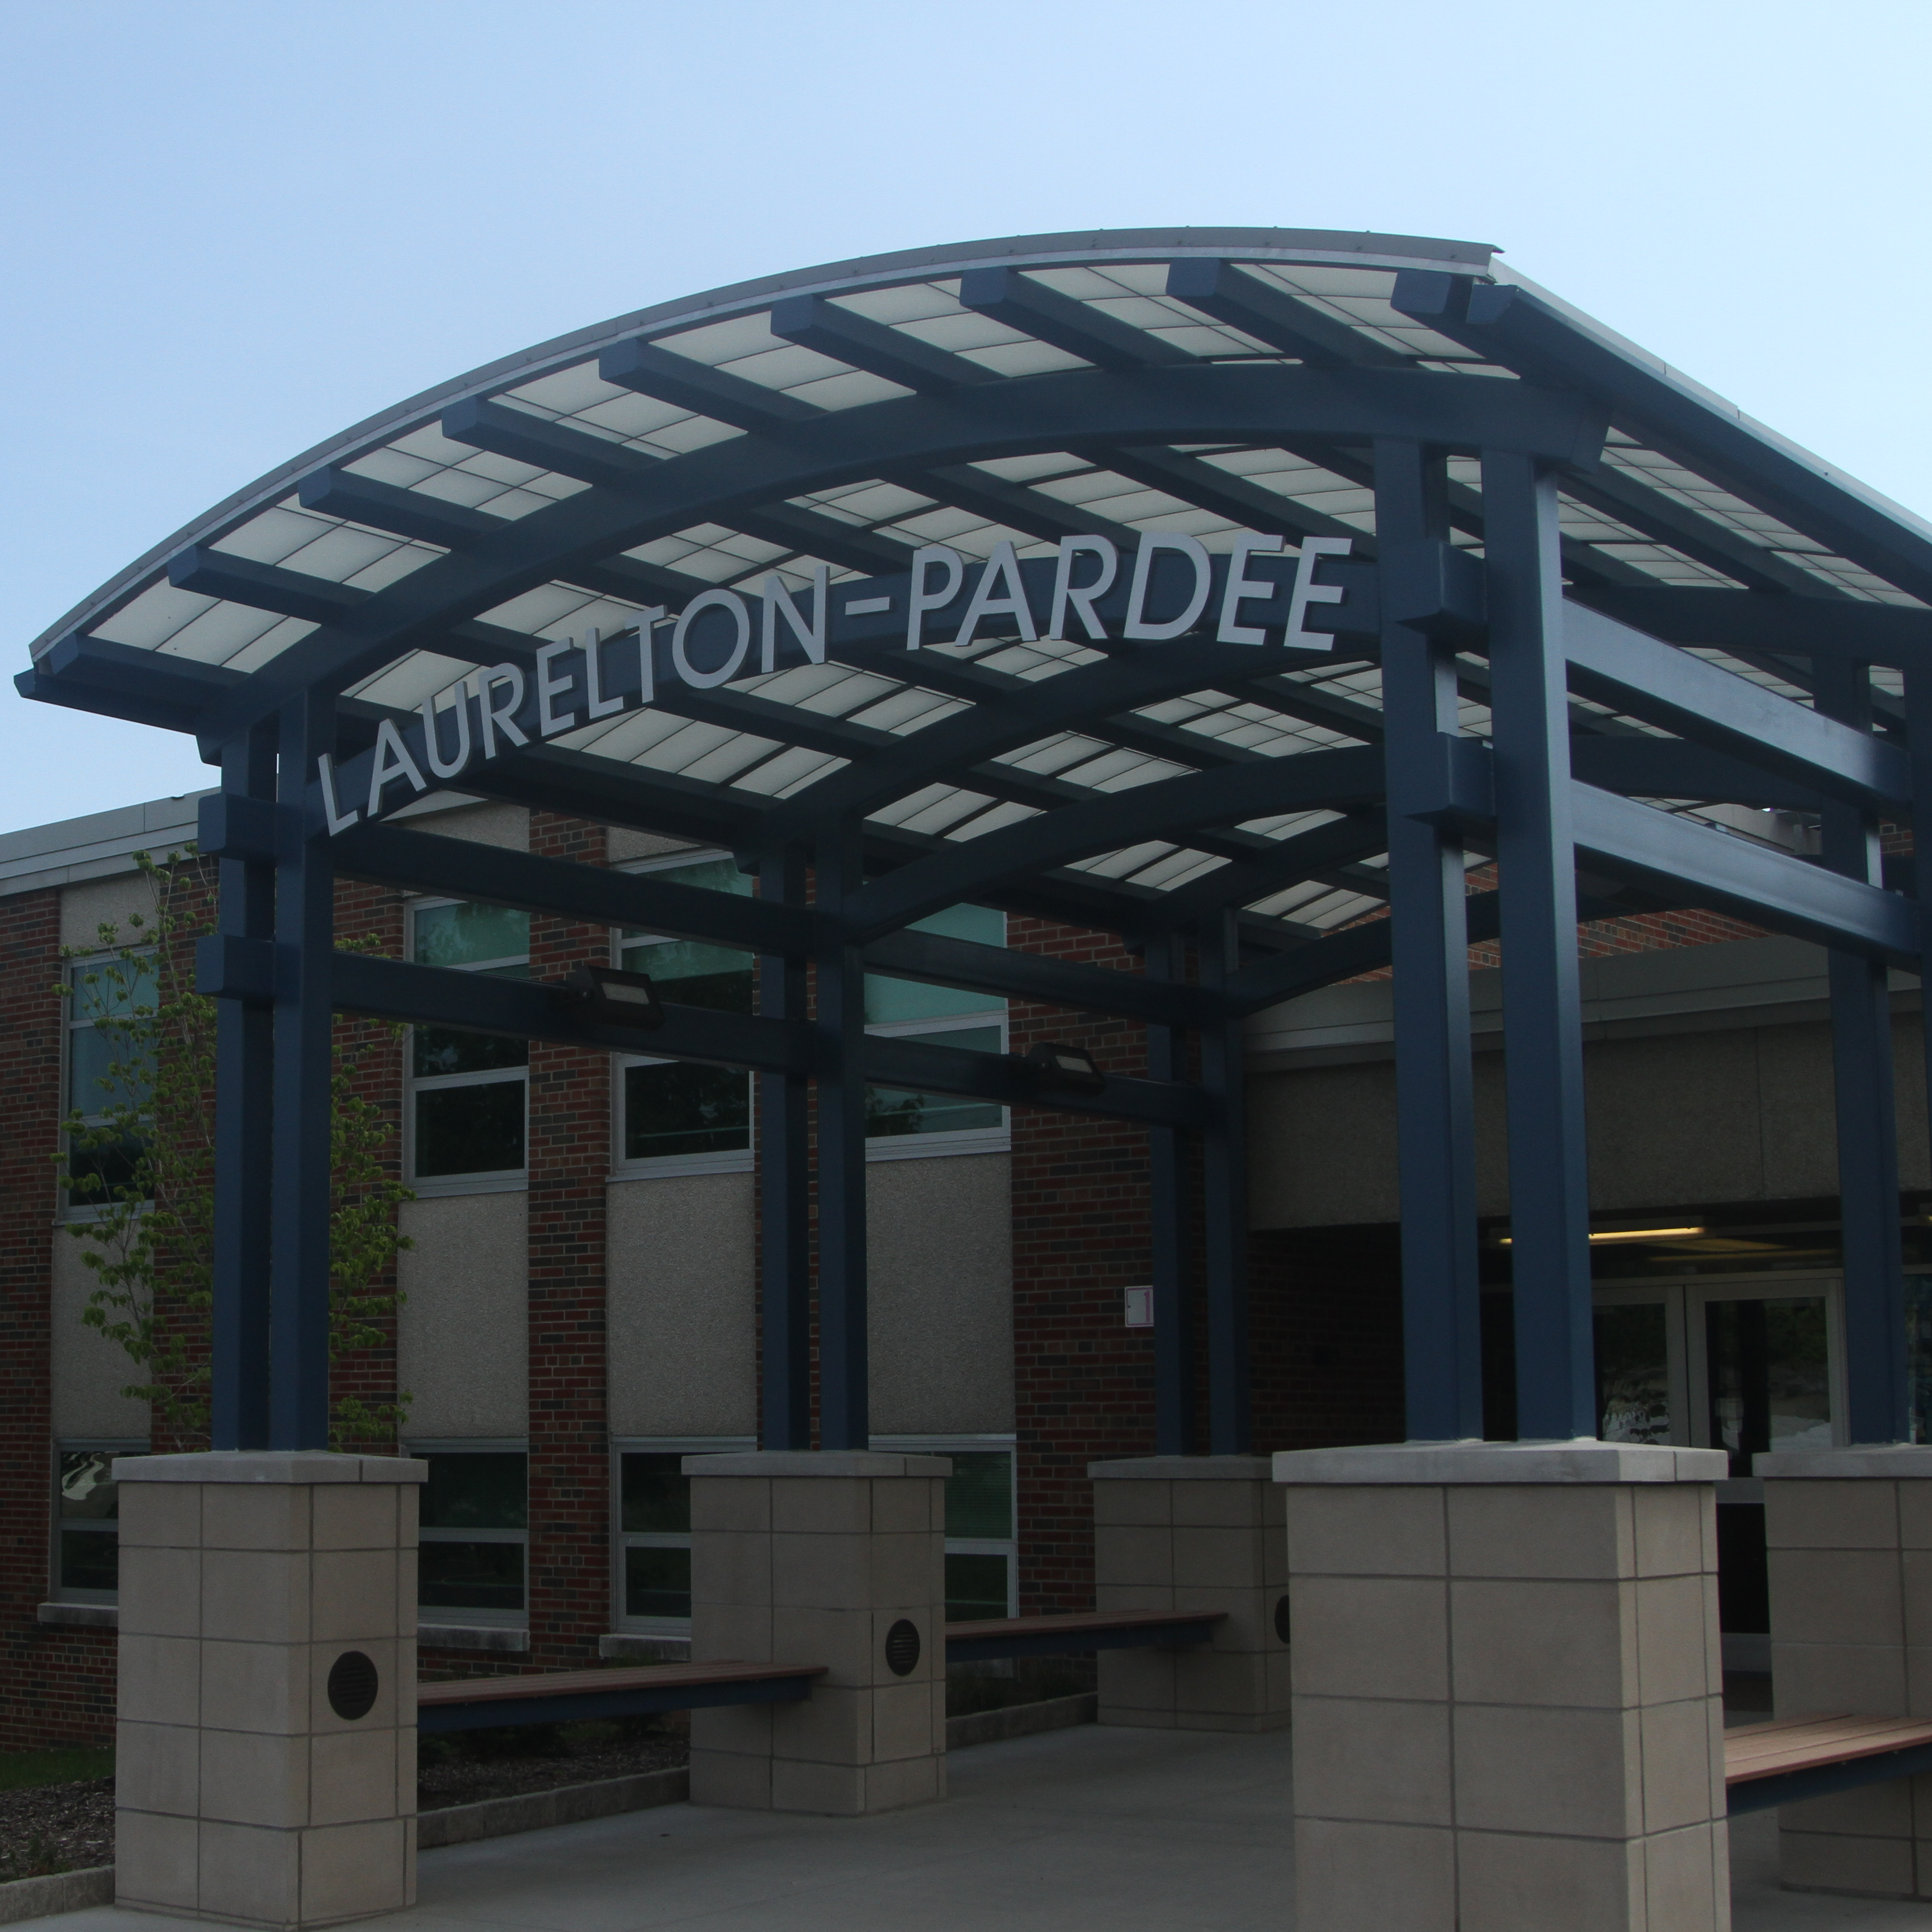 Laurelton-Pardee Intermediate School